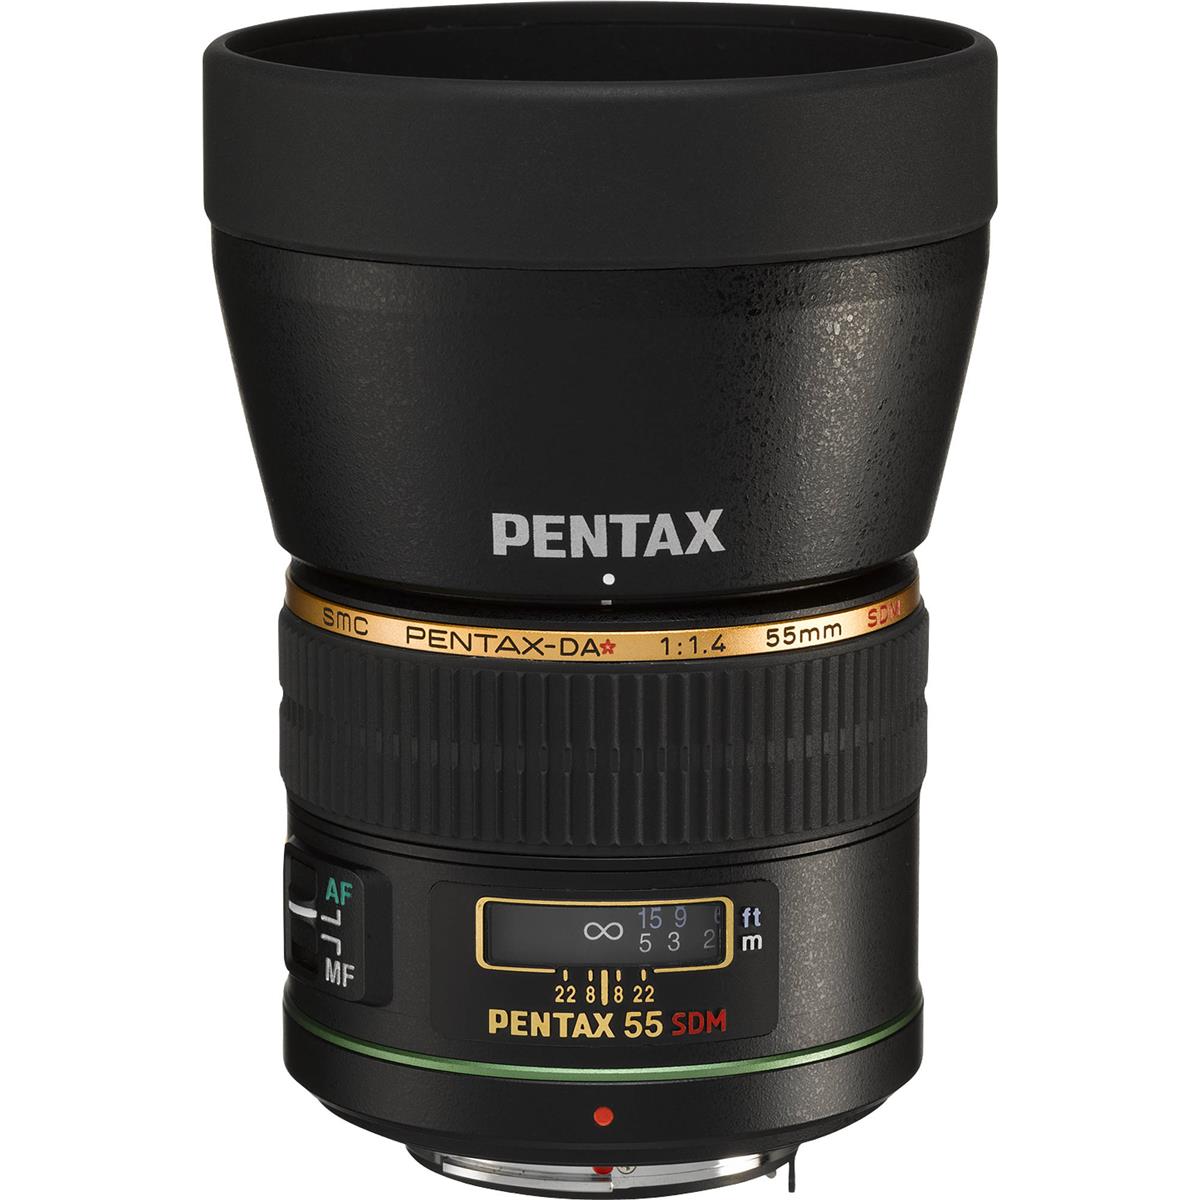 Image of Pentax SMCP-DA 55mm f/1.4 SDM Lens for Digital SLR Cameras